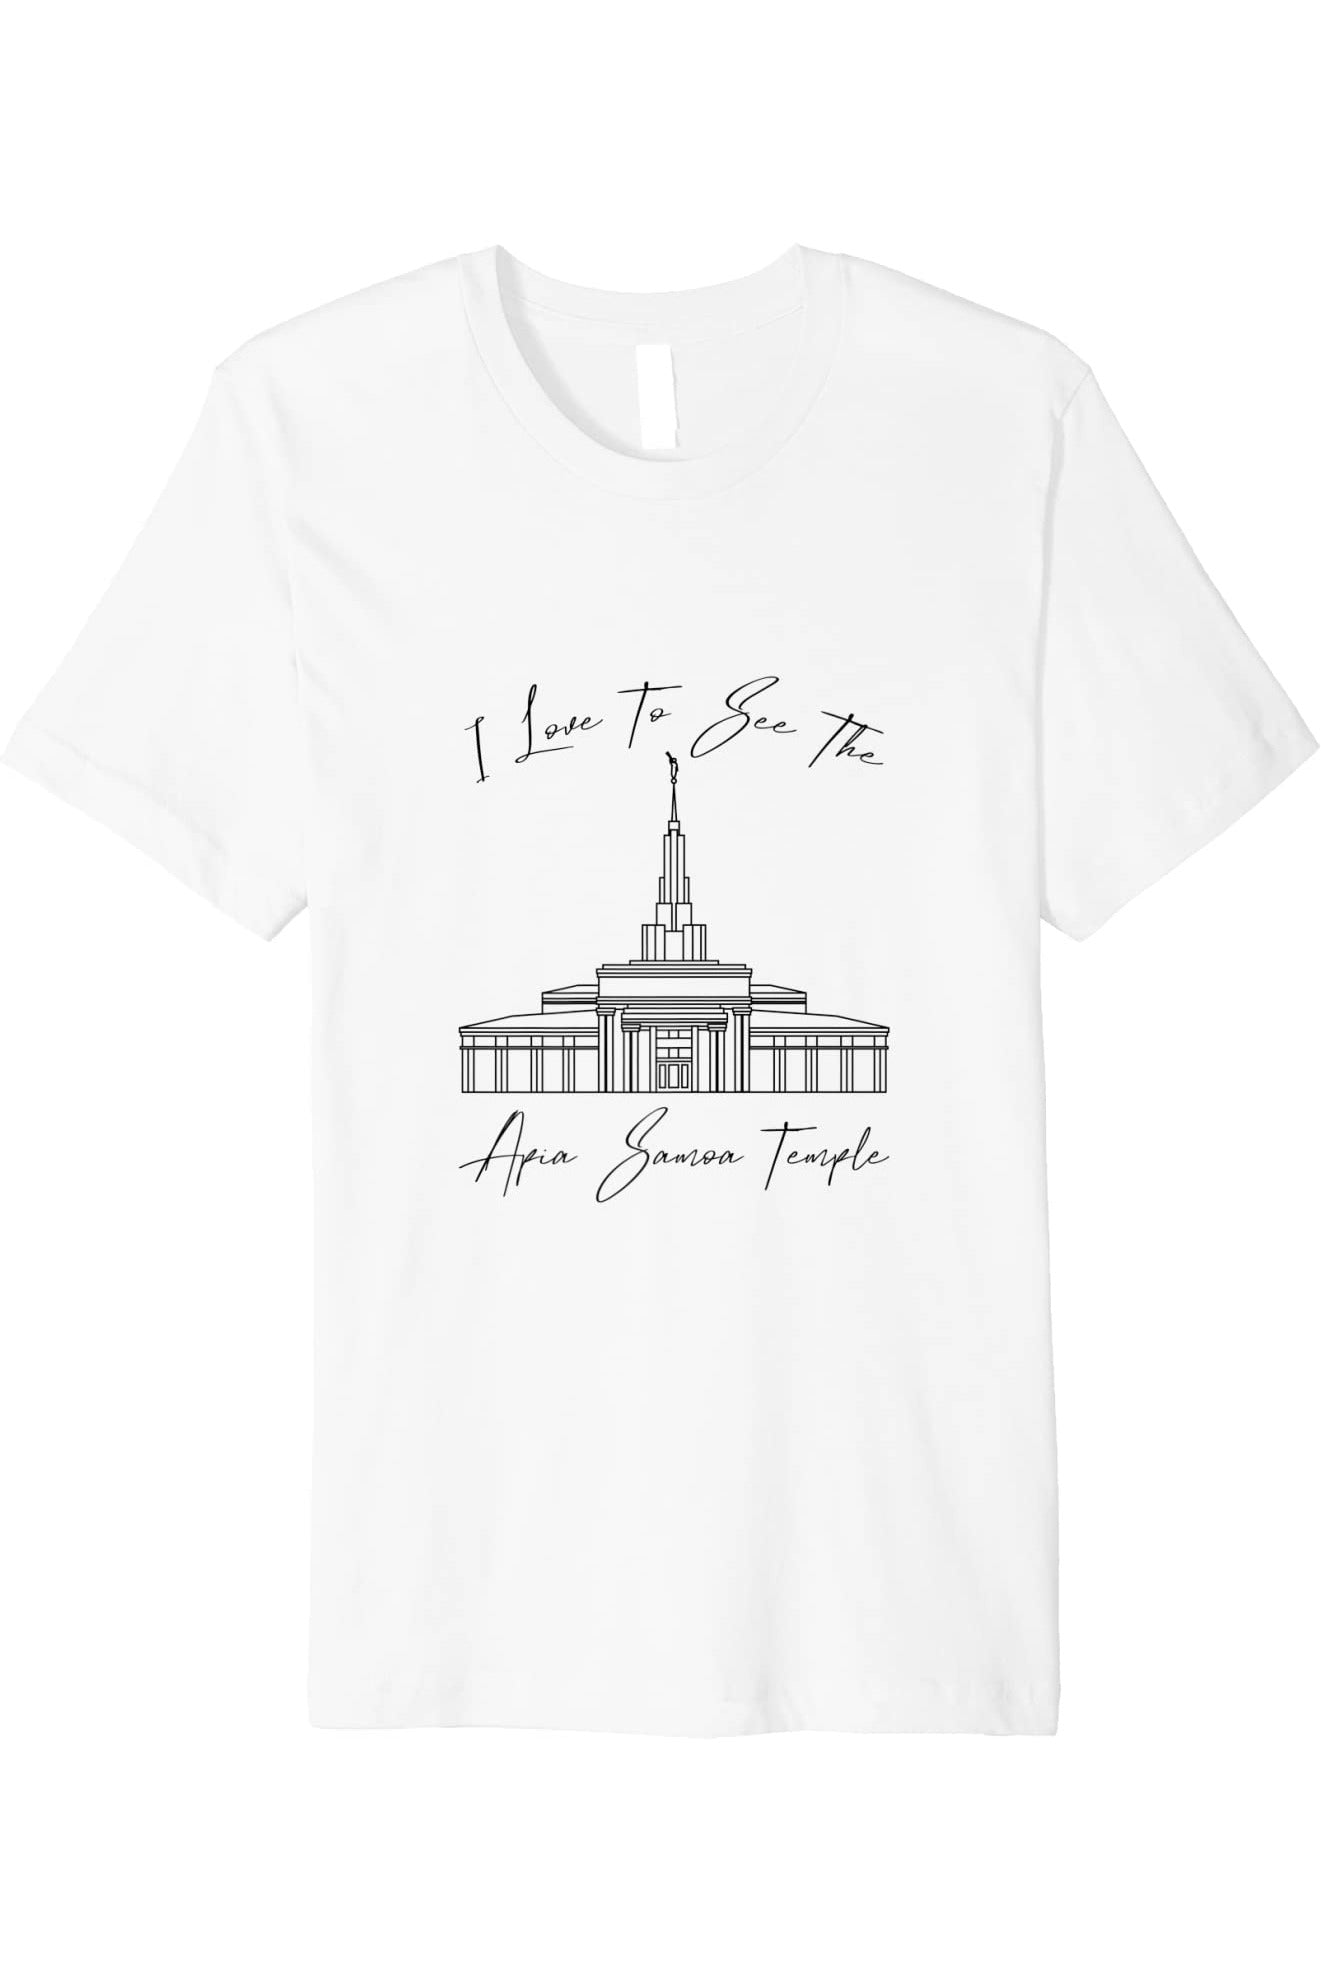 Apia Samoa Temple T-Shirt - Premium - Calligraphy Style (English) US